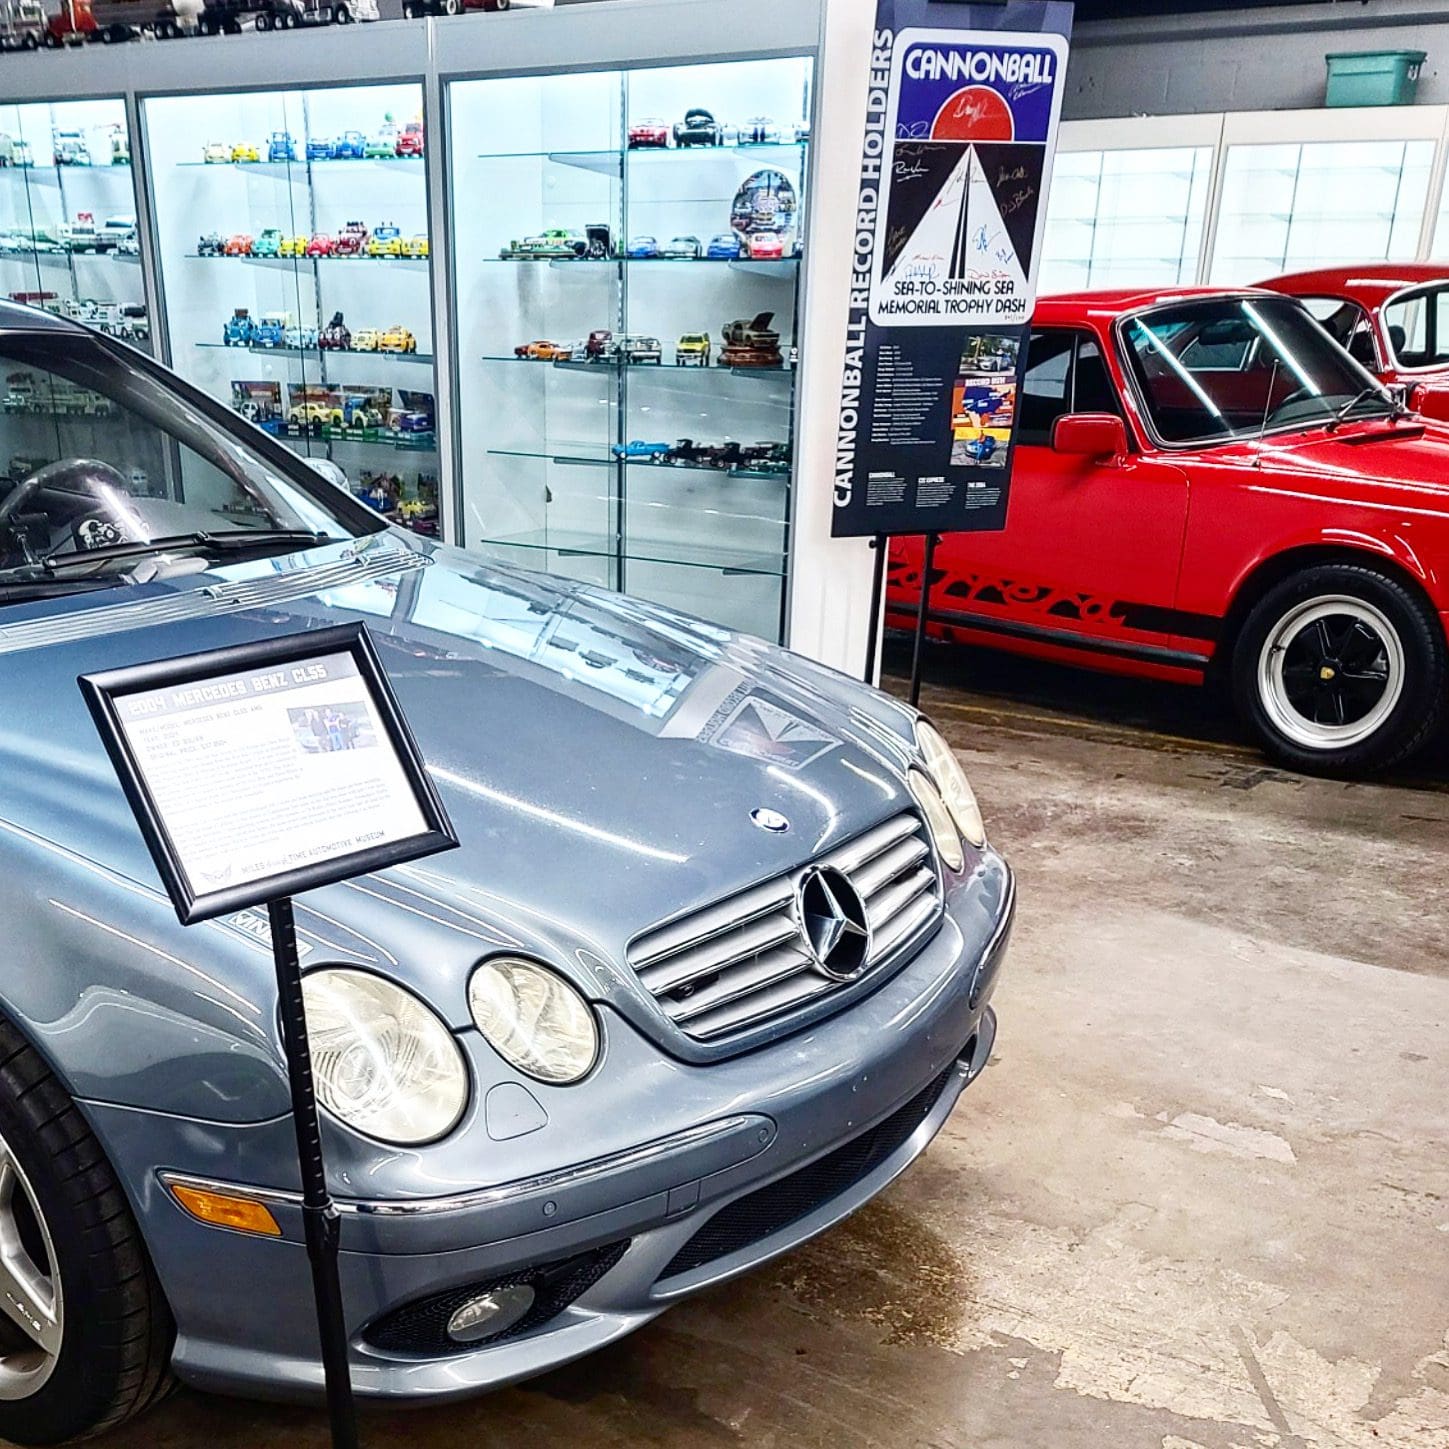 2004 Mercedes | Miles Through Time Automotive Museum Exhibits